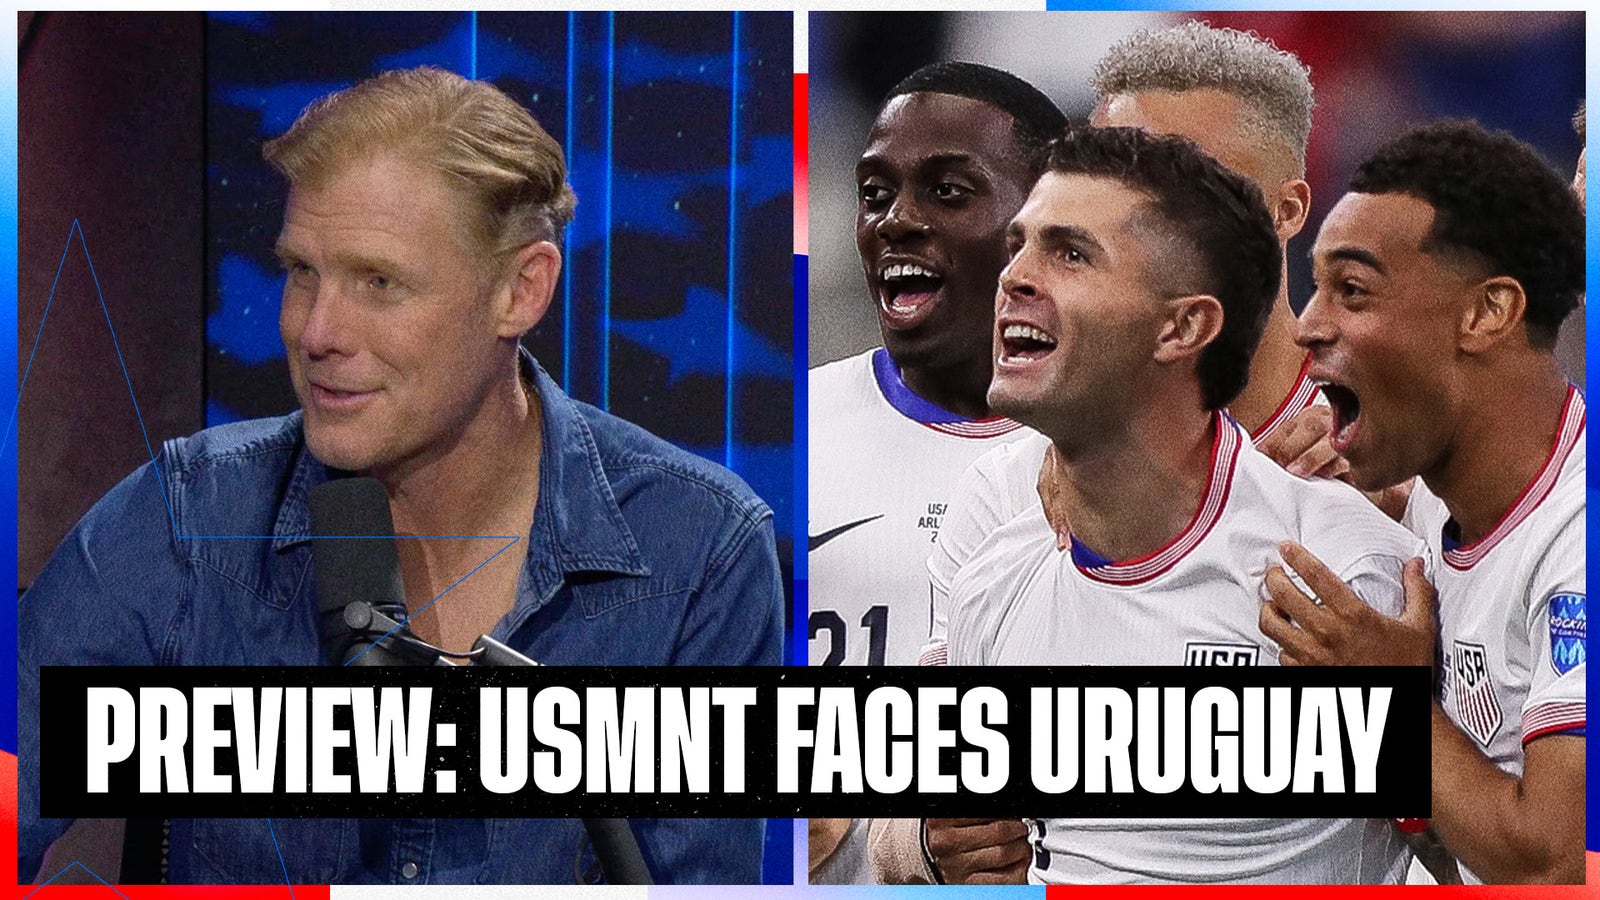 USMNT vs. Uruguay Preview: Can USMNT get their signature win? | SOTU